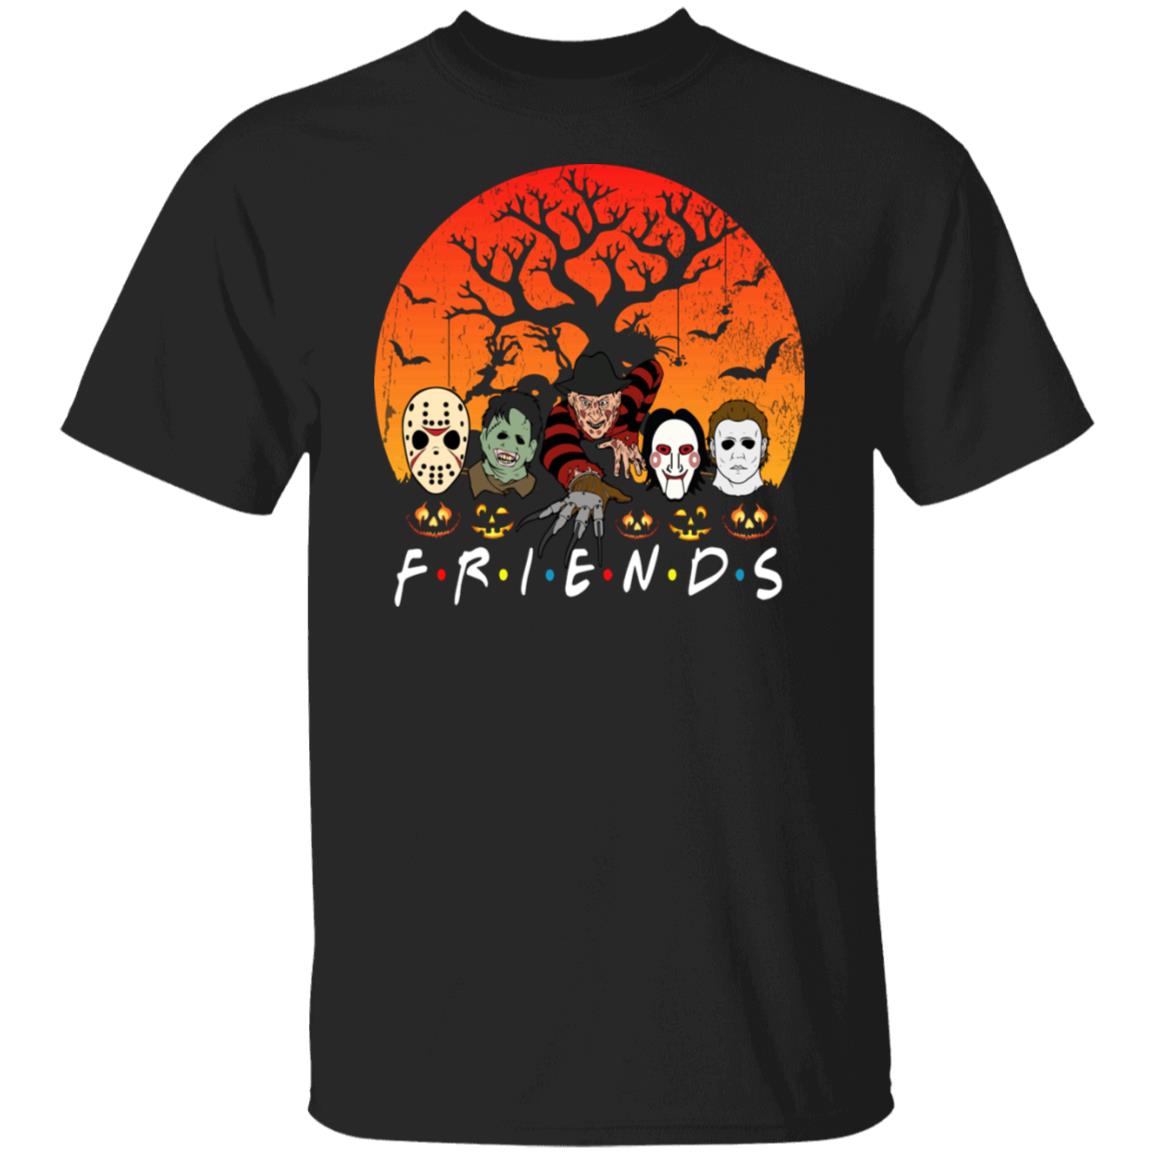 Friends Horror Characters Horror Movie Halloween Gift Tee Shirt